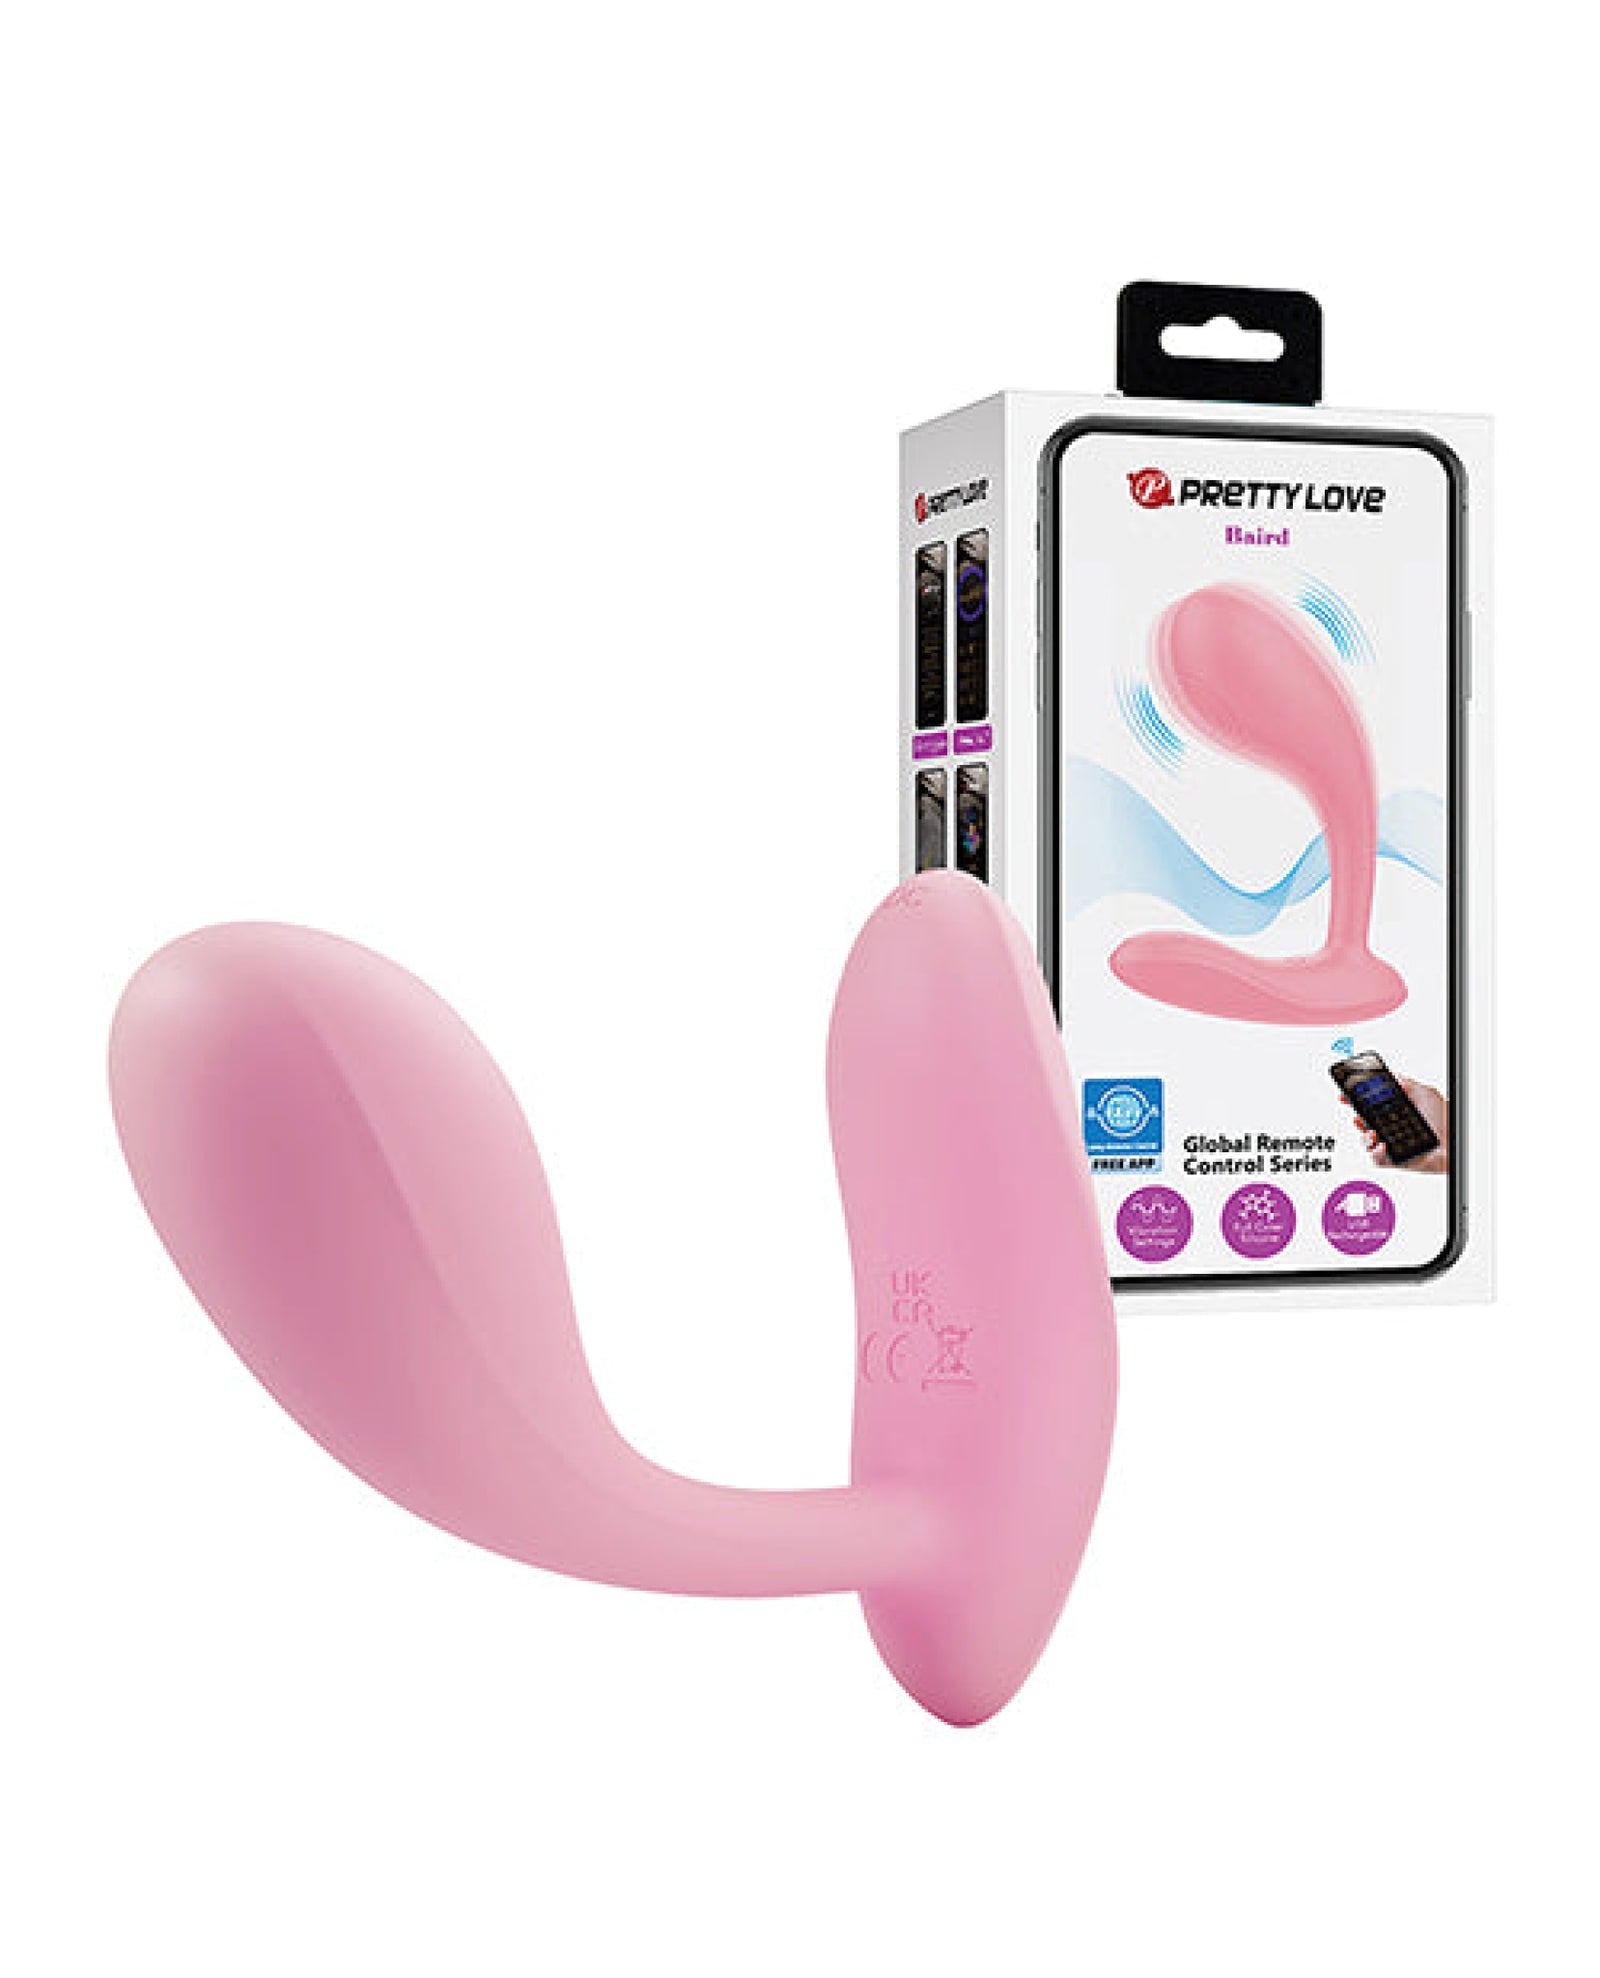 Pretty Love Baird App-enabled Vibrating Butt Plug - Hot Pink Pretty Love